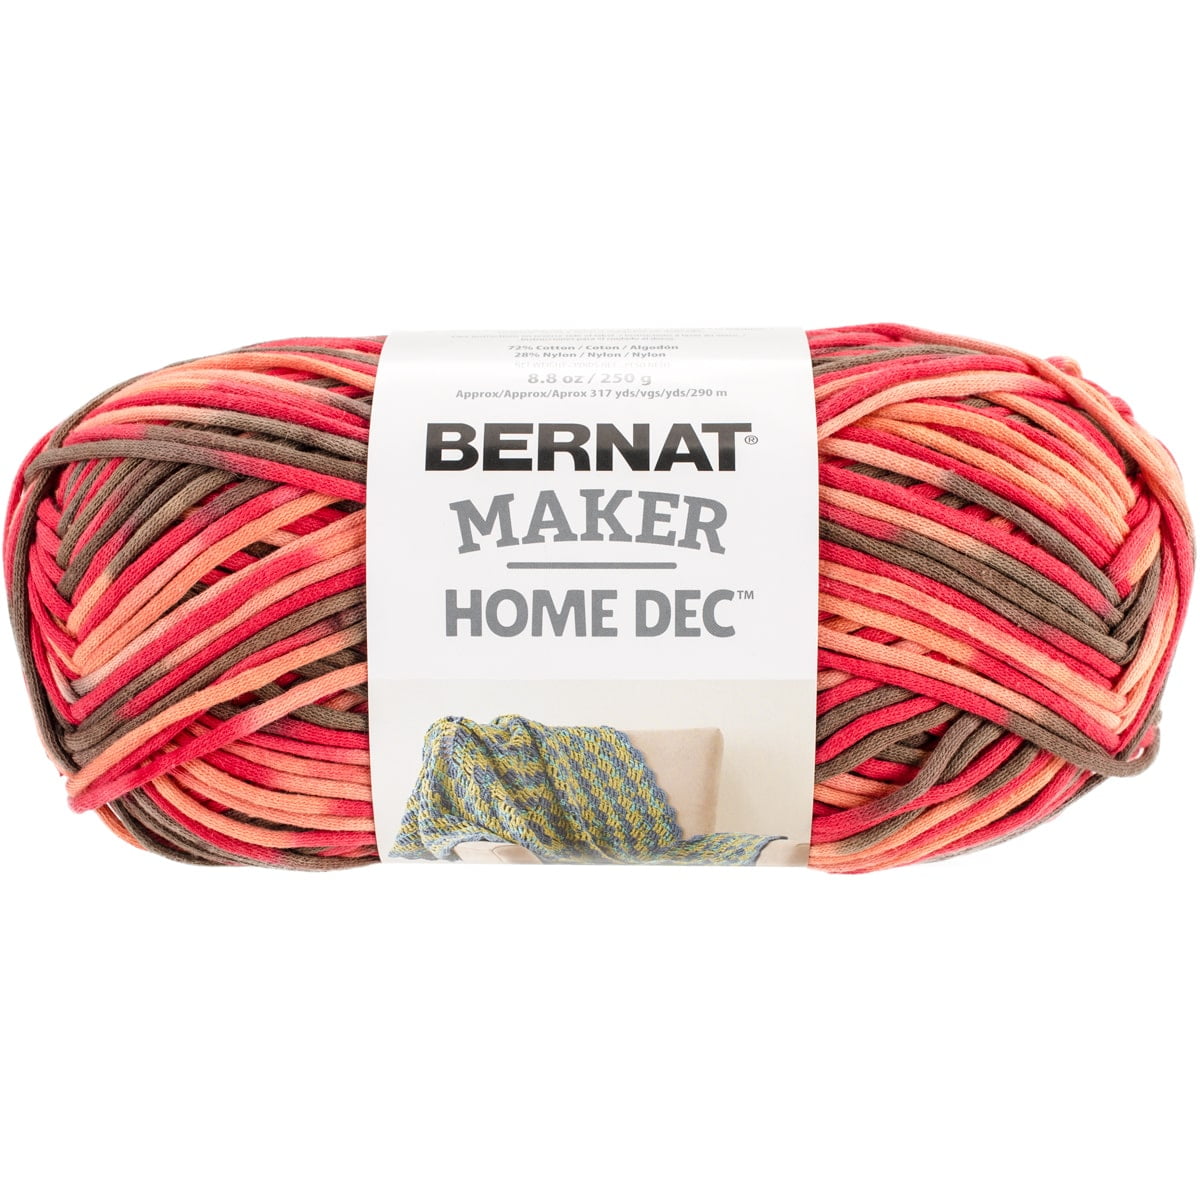 Yarn 101 Bernat Maker Home Dec, Episode 323 